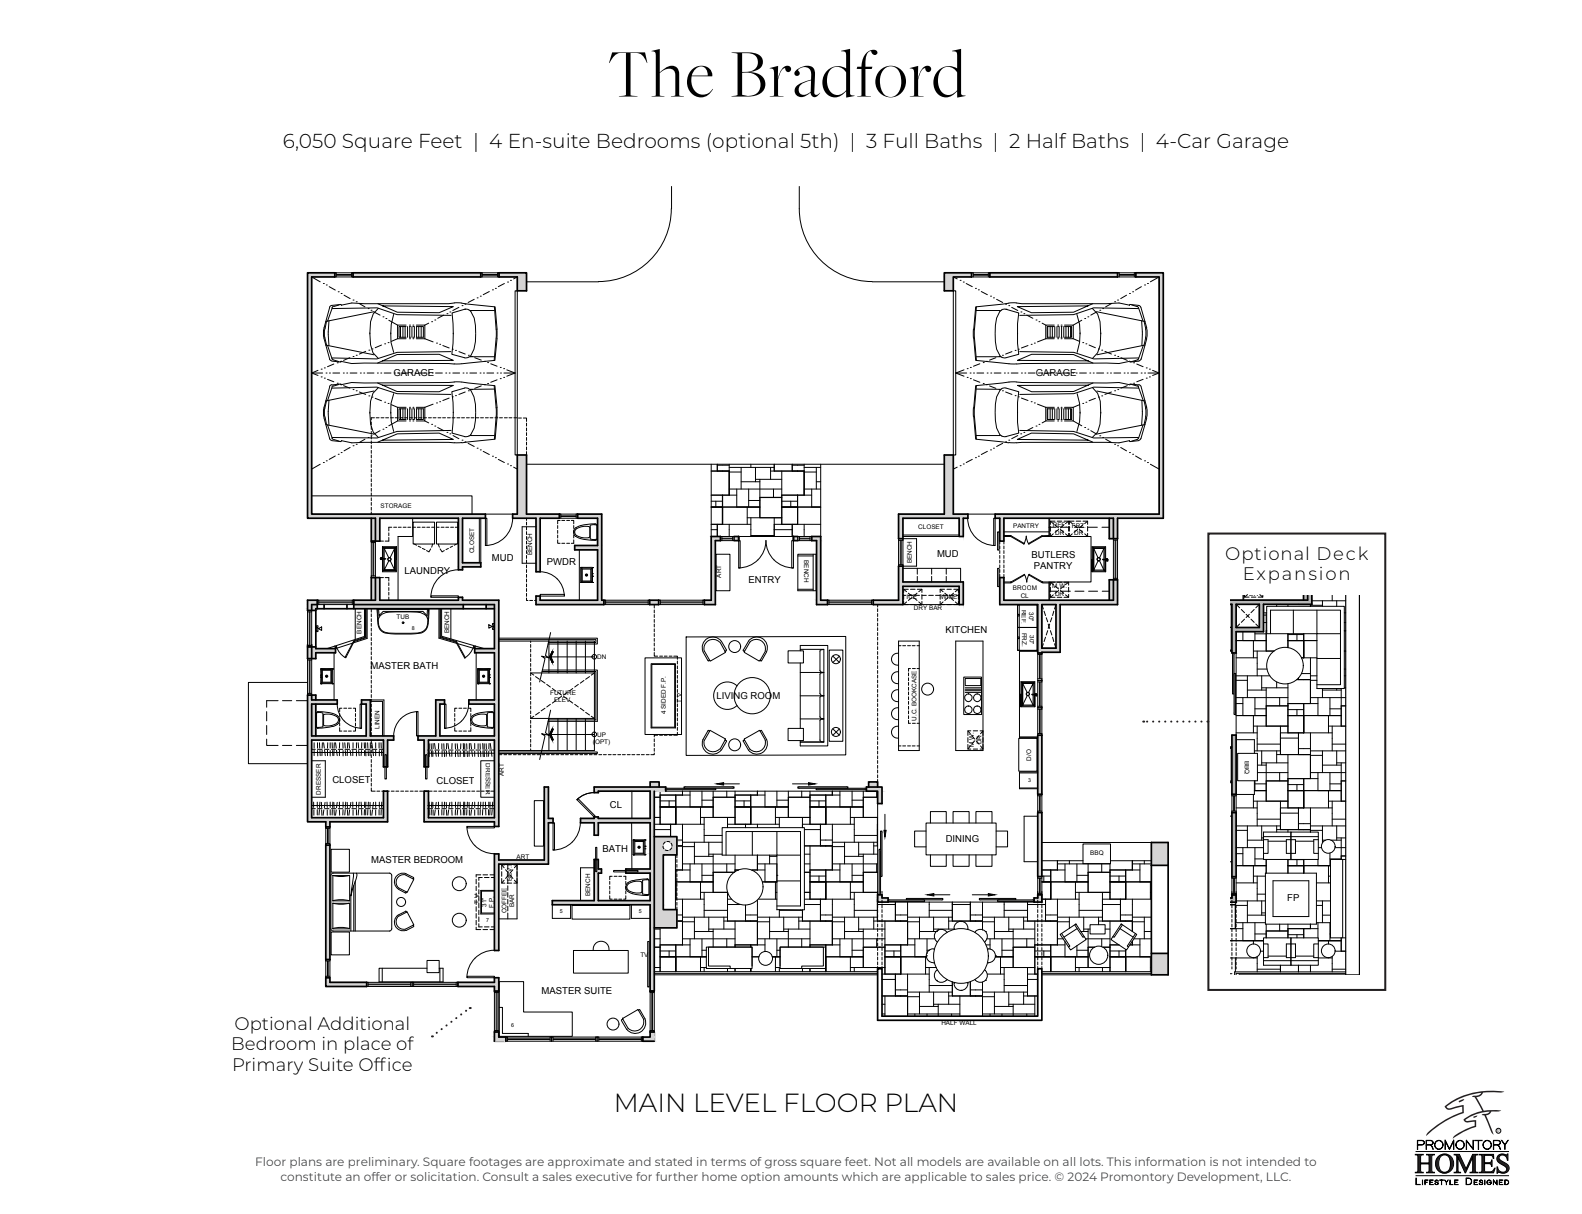 Promontory homes - The Bradford